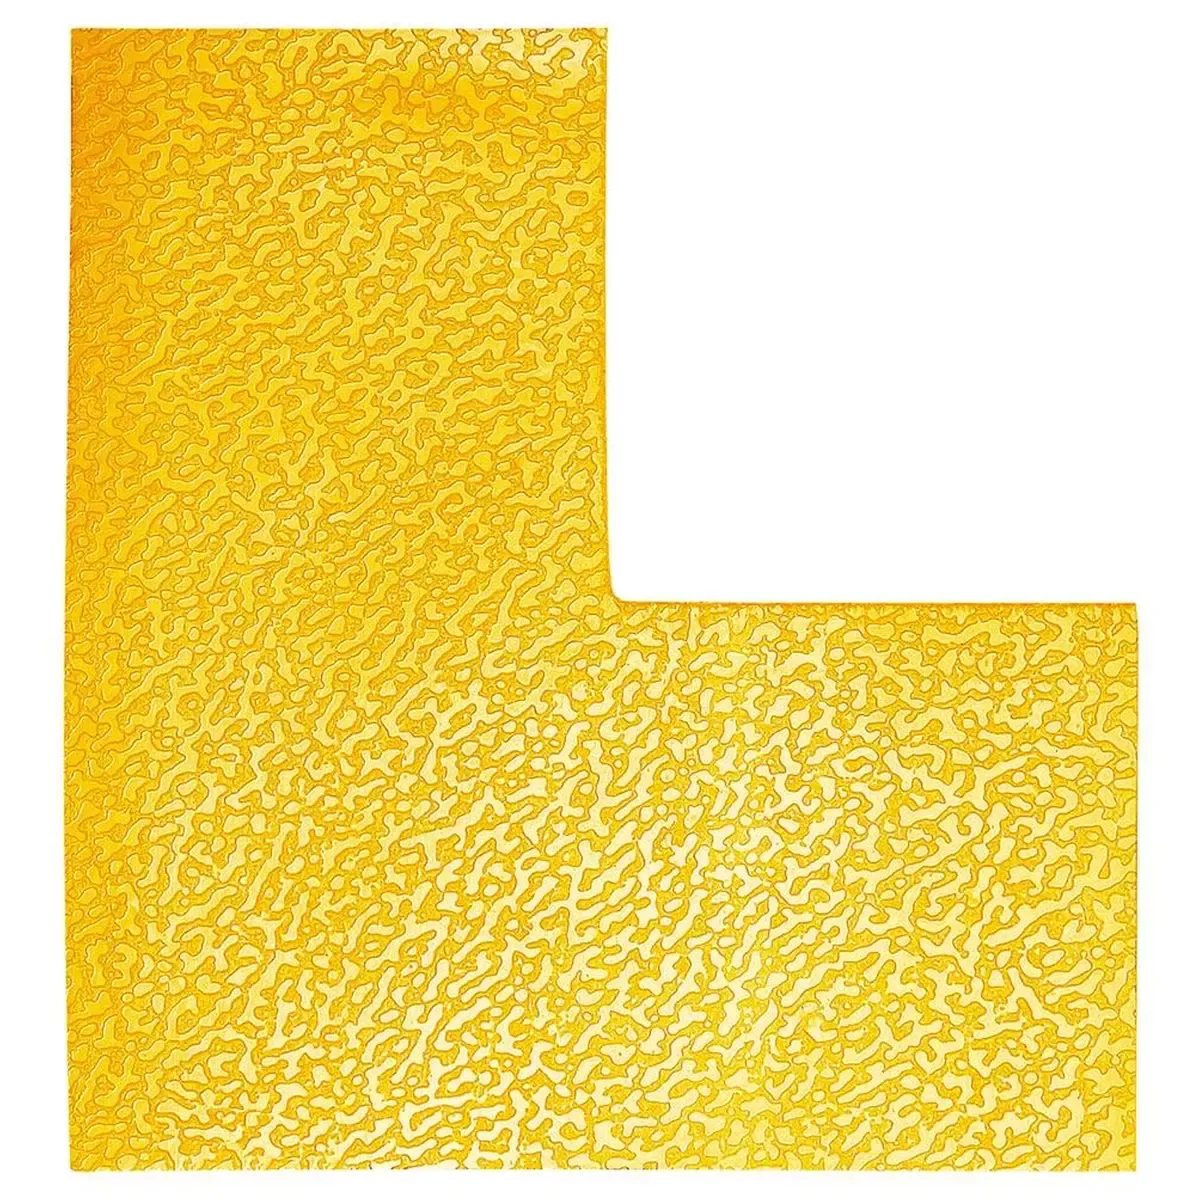 Bodenmarkierung, selbstklebend, L-Form, LxB 100x100 mm, Farbe gelb, VE 20 Stück